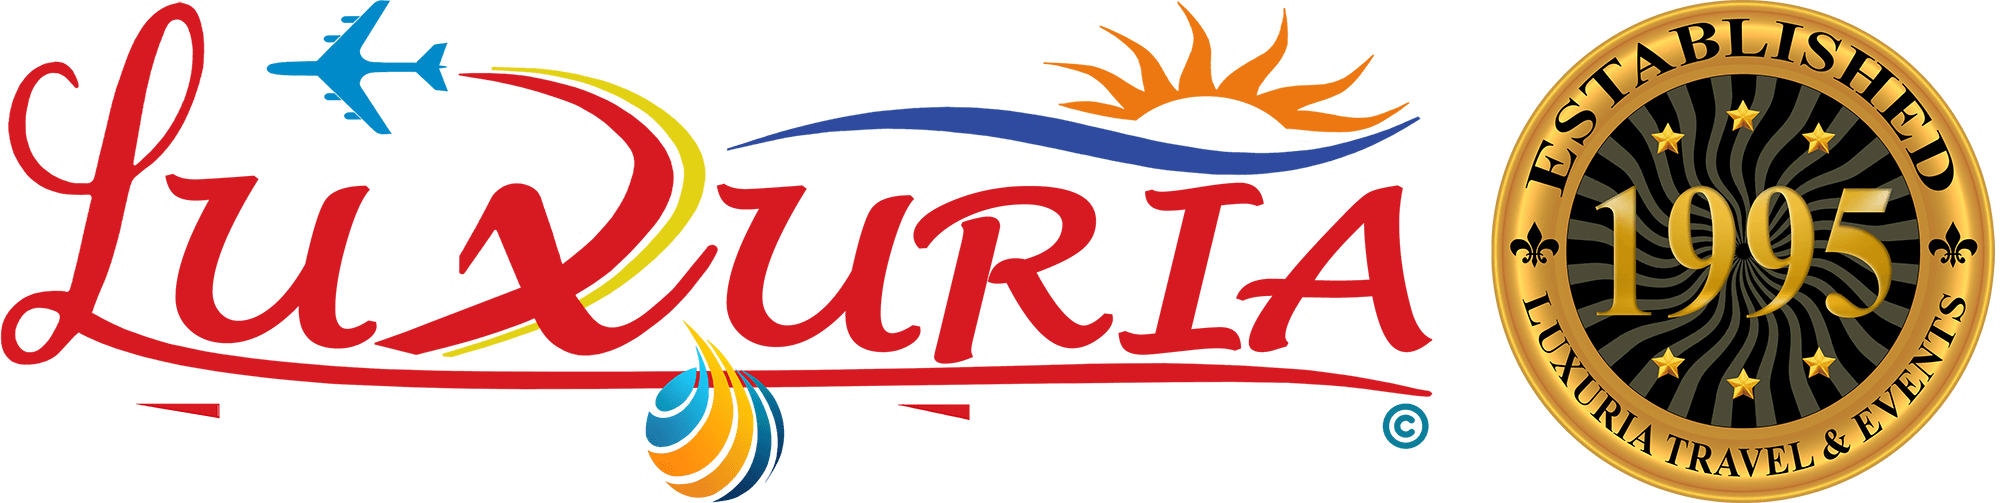 Luxuria Travel & Events | هولندا والإمارات والأردن تتصدى معًا للتحديات التي تواجه أمن المياه والطاقة والغذاء ⋆ Luxuria Travel & Events